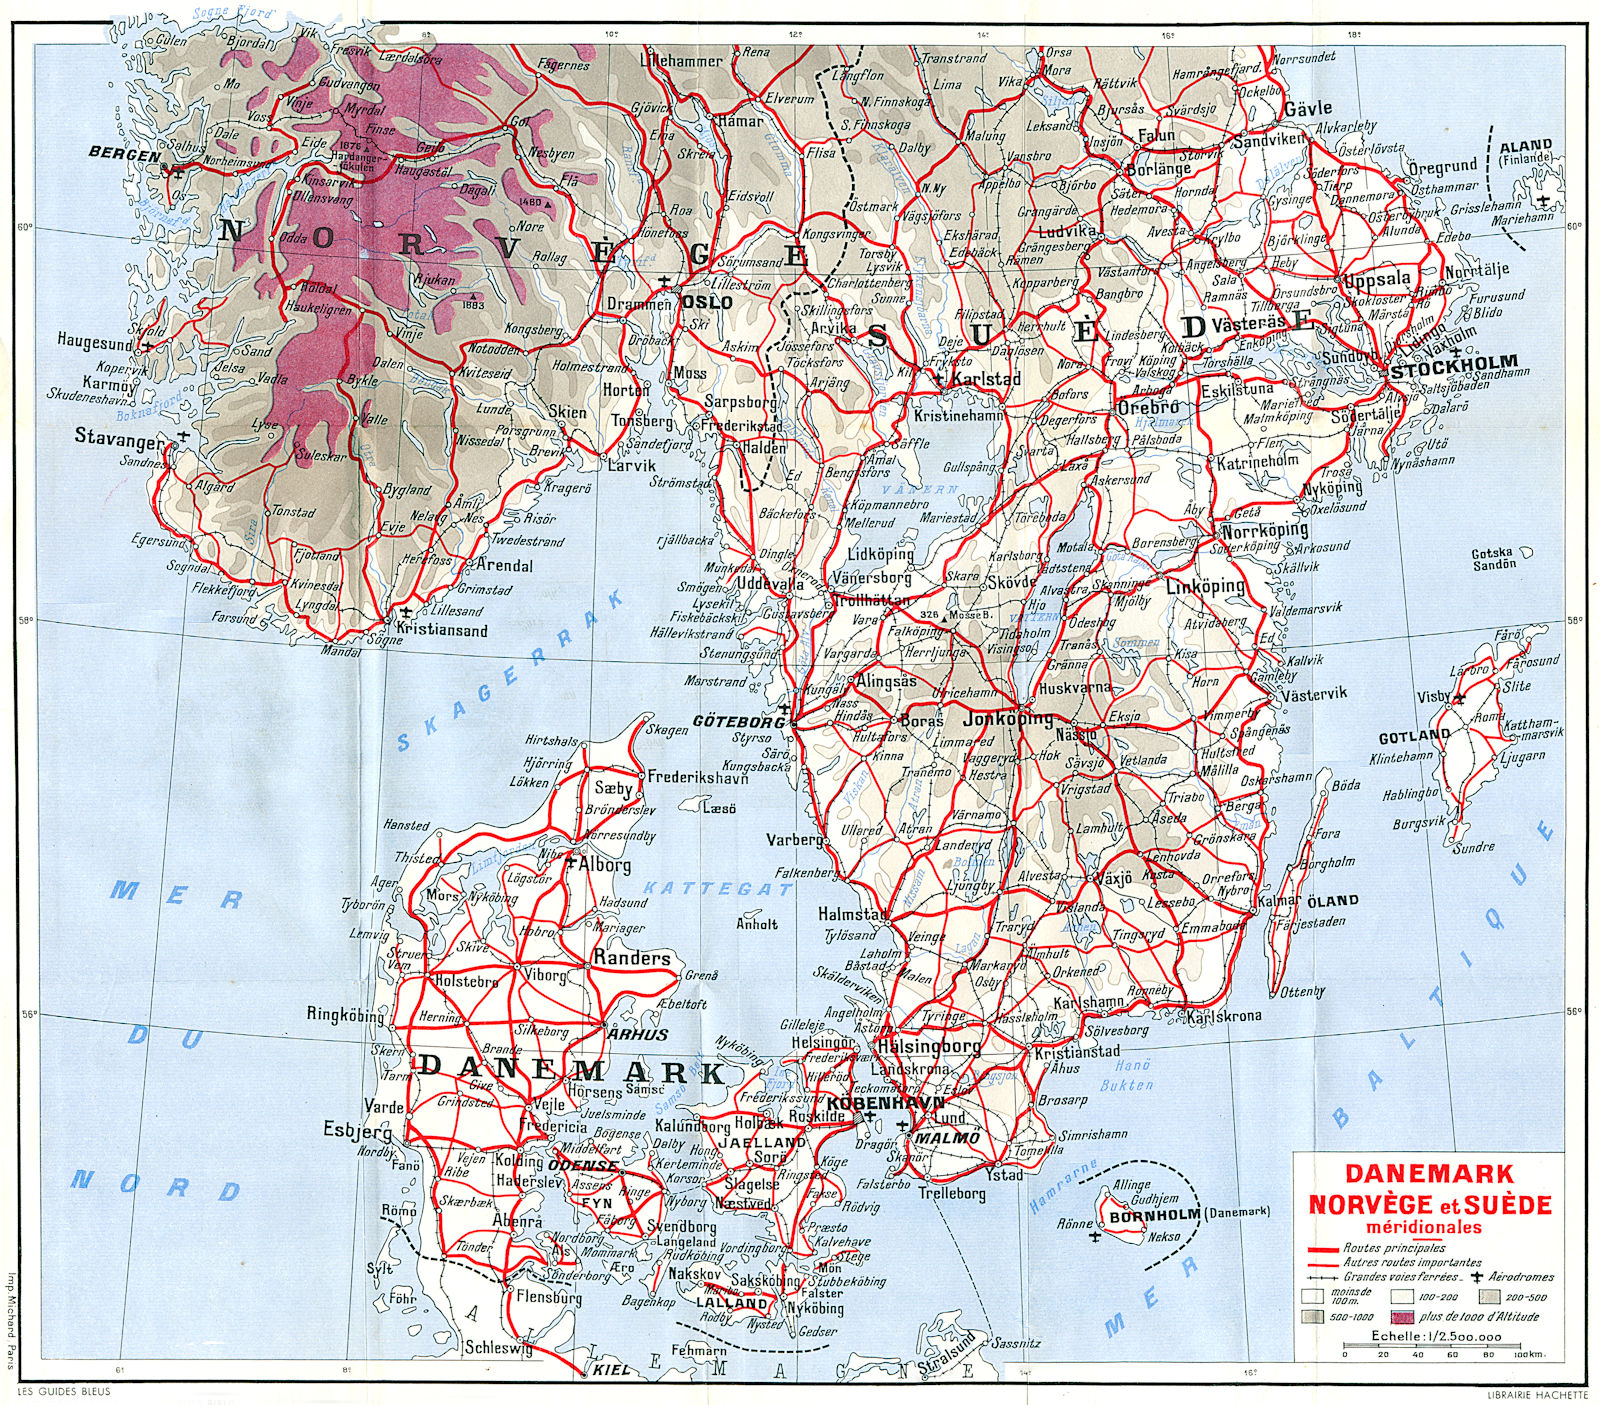 DENMARK. Norvege Suede Meridionales 1955 old vintage map plan chart